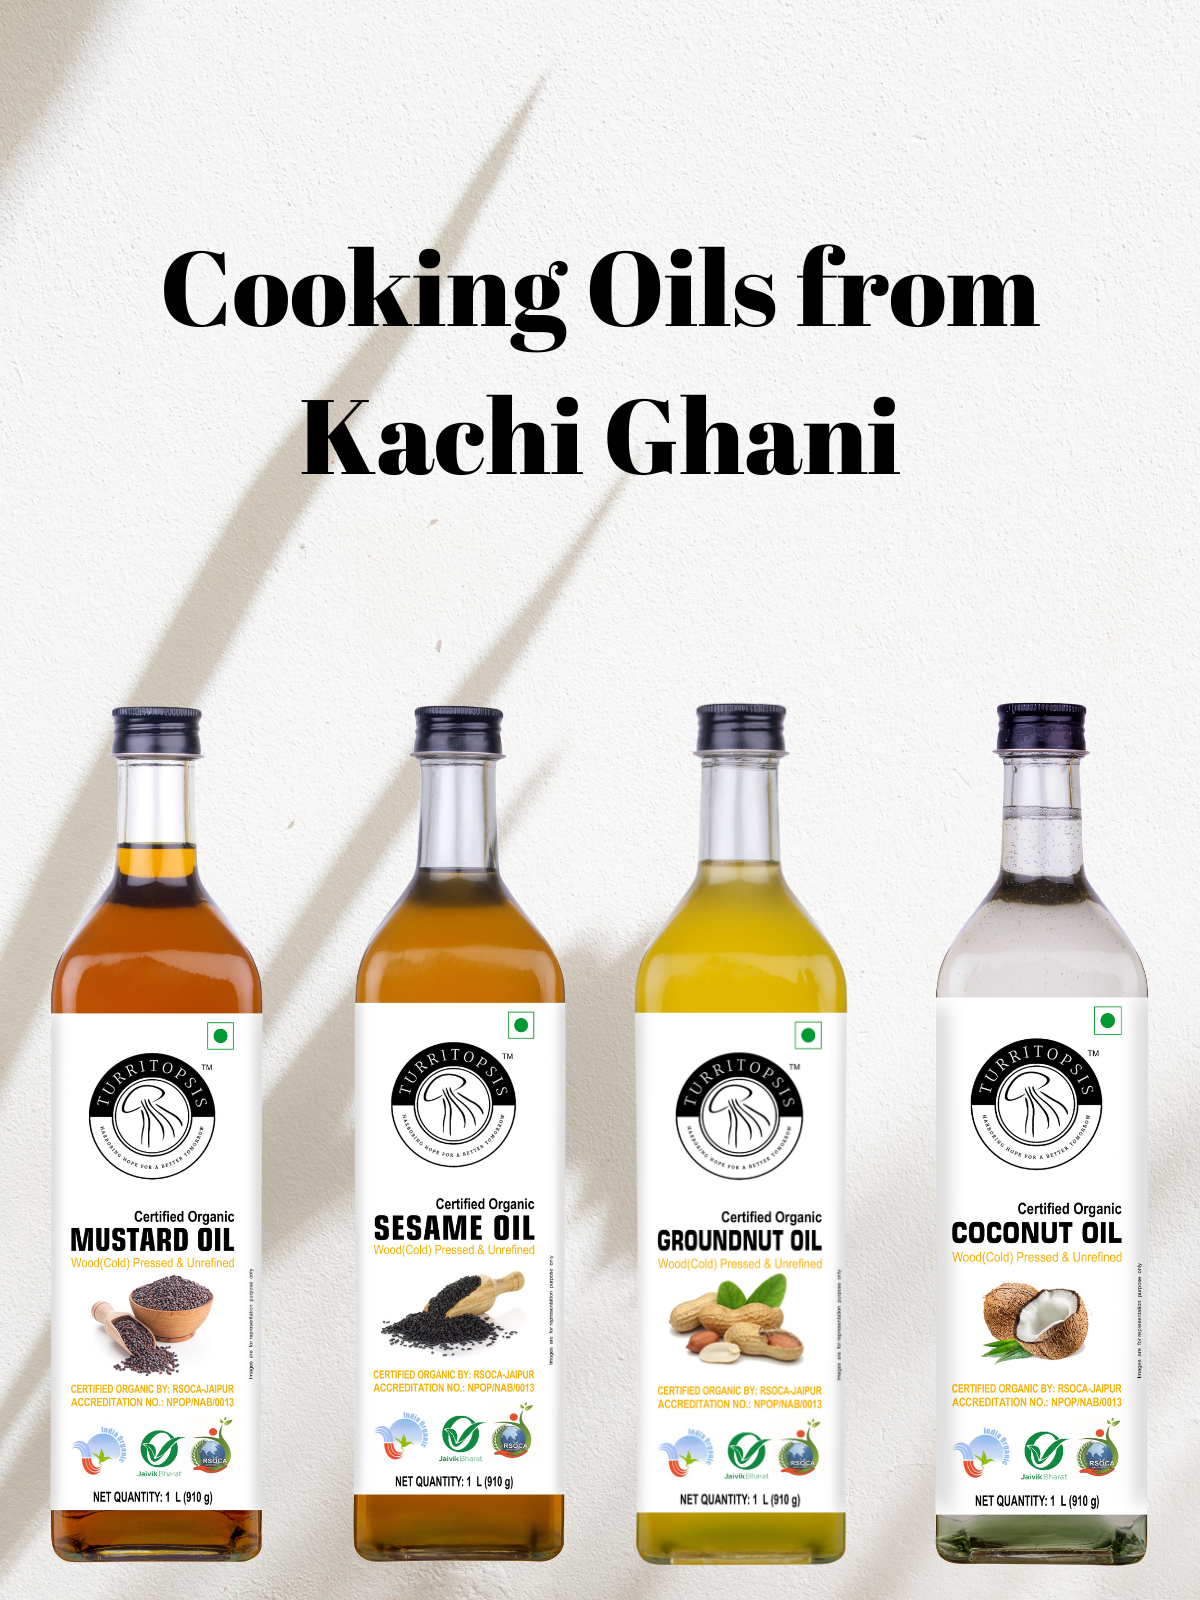 certified organic oil from kachi ghani